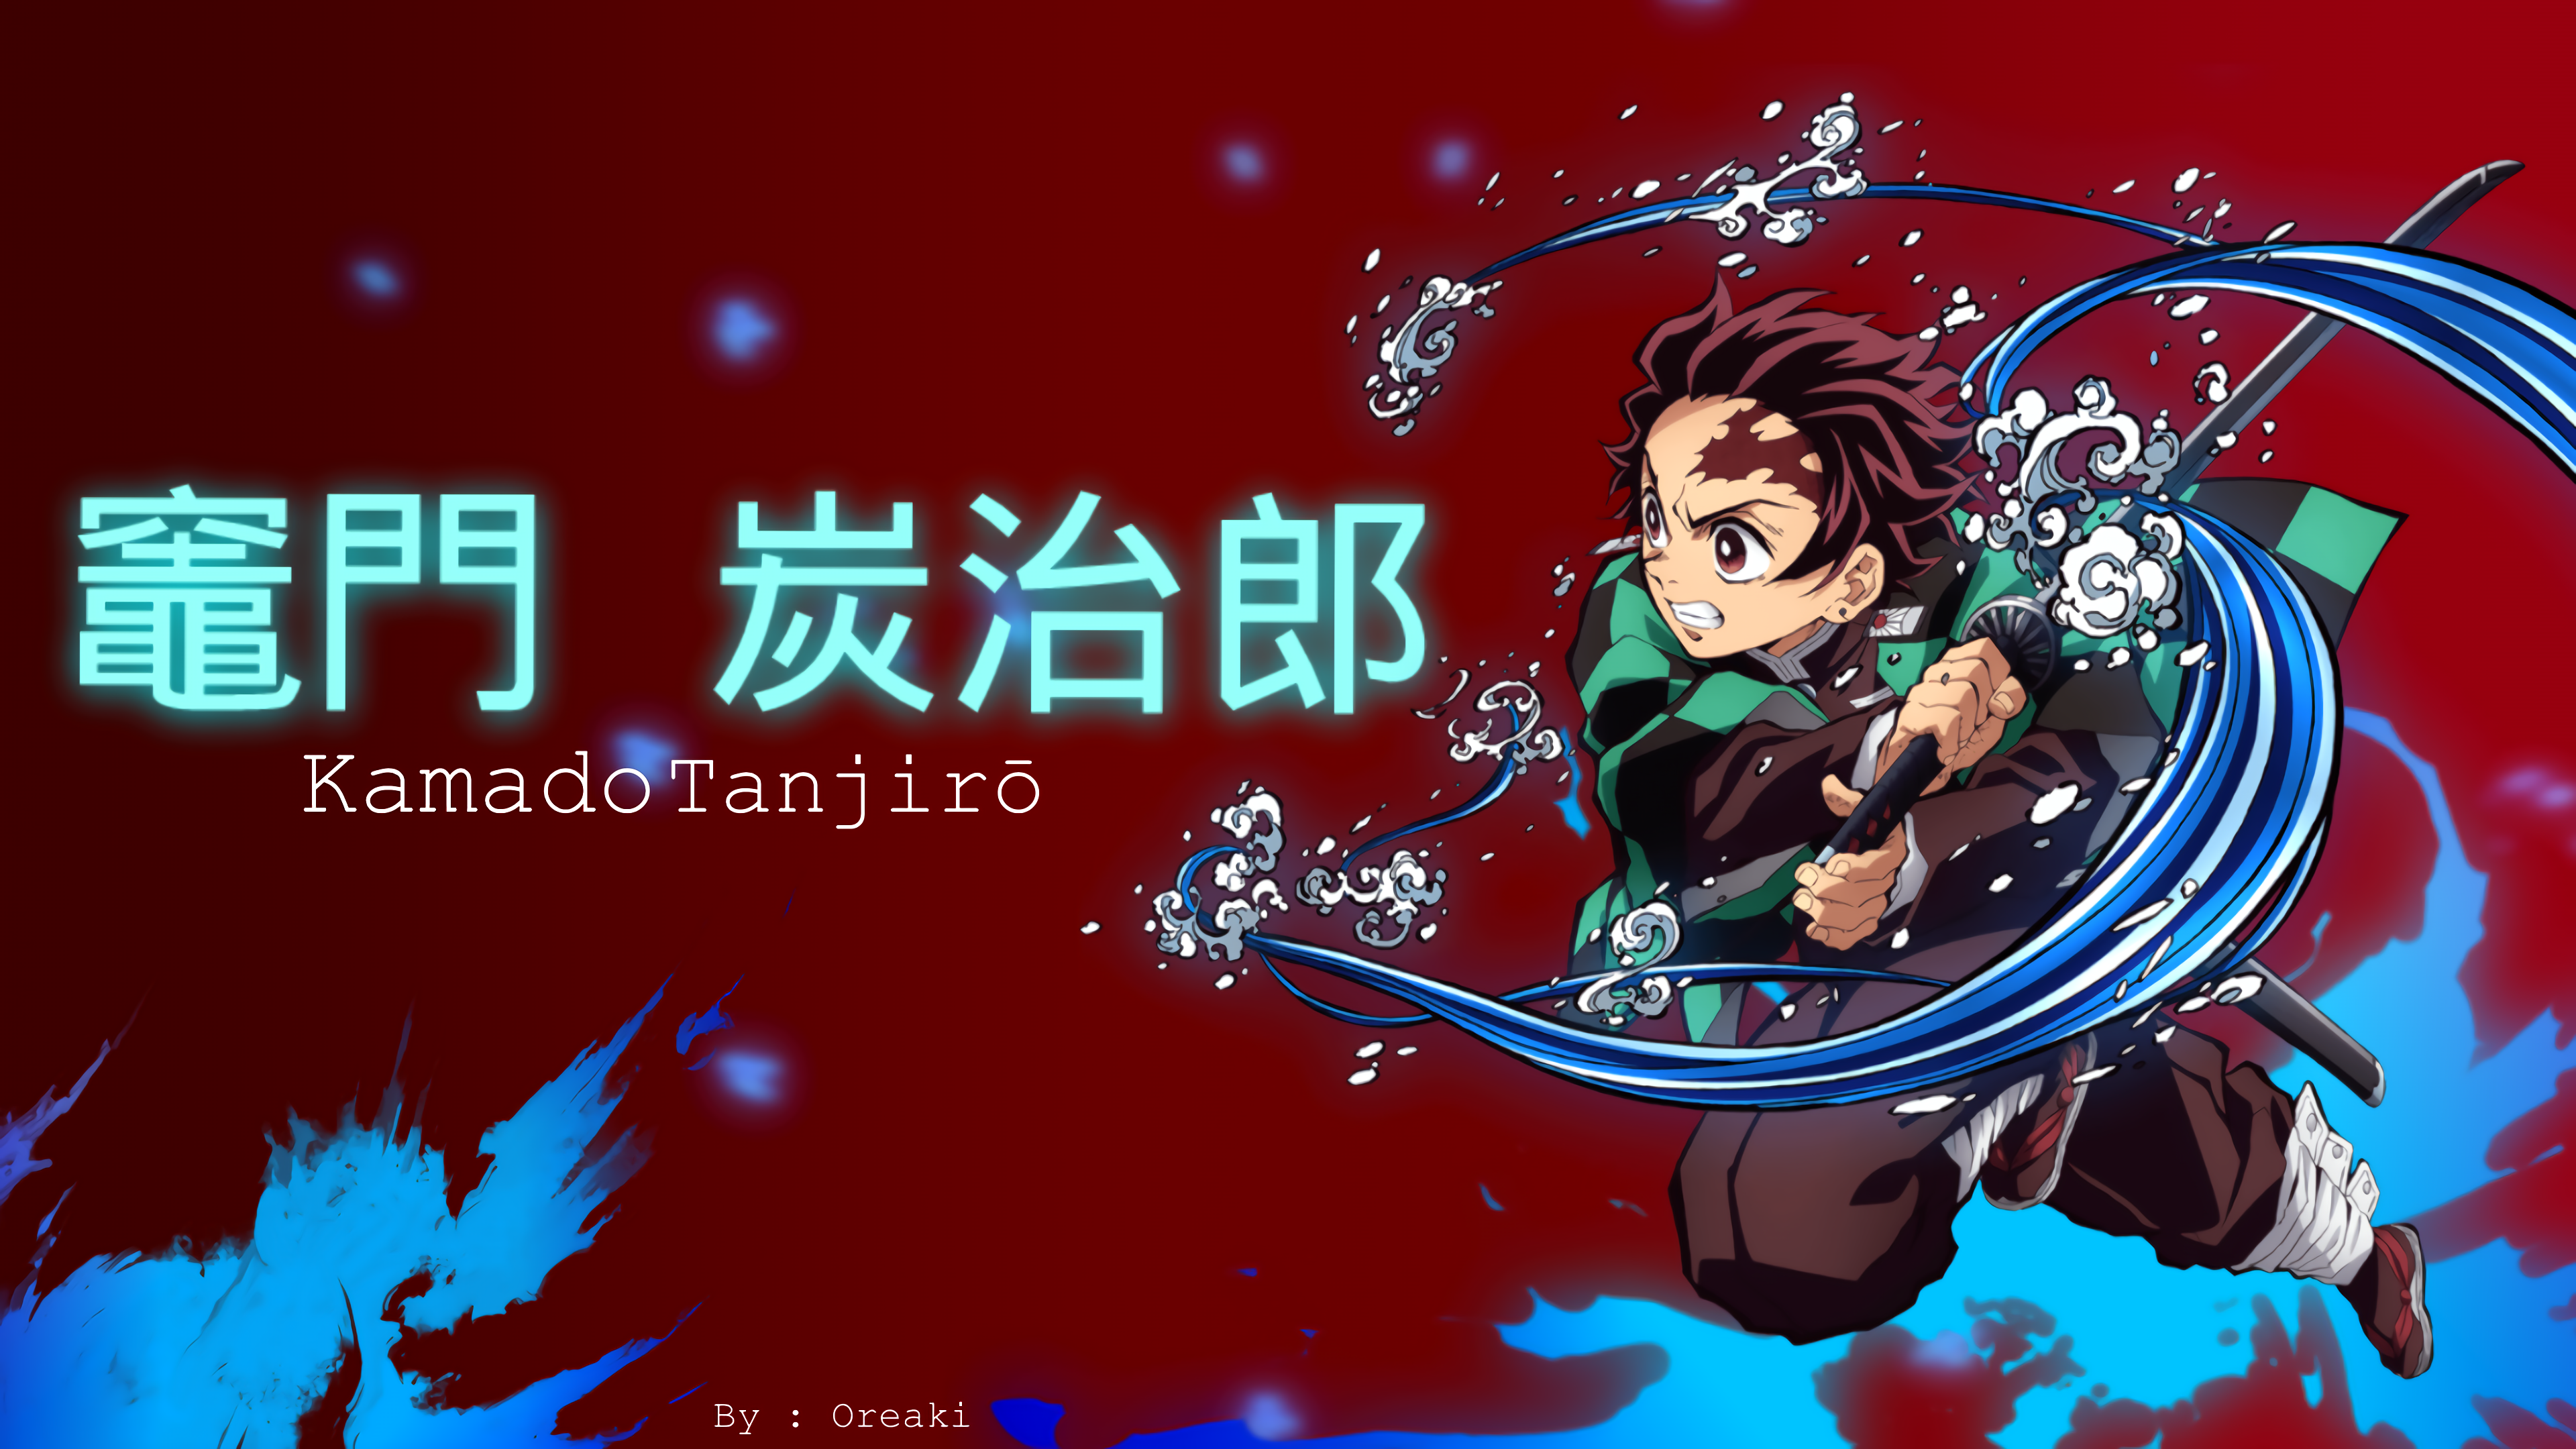 Anime 3840x2160 Kimetsu no Yaiba kanji typography red background anime artwork